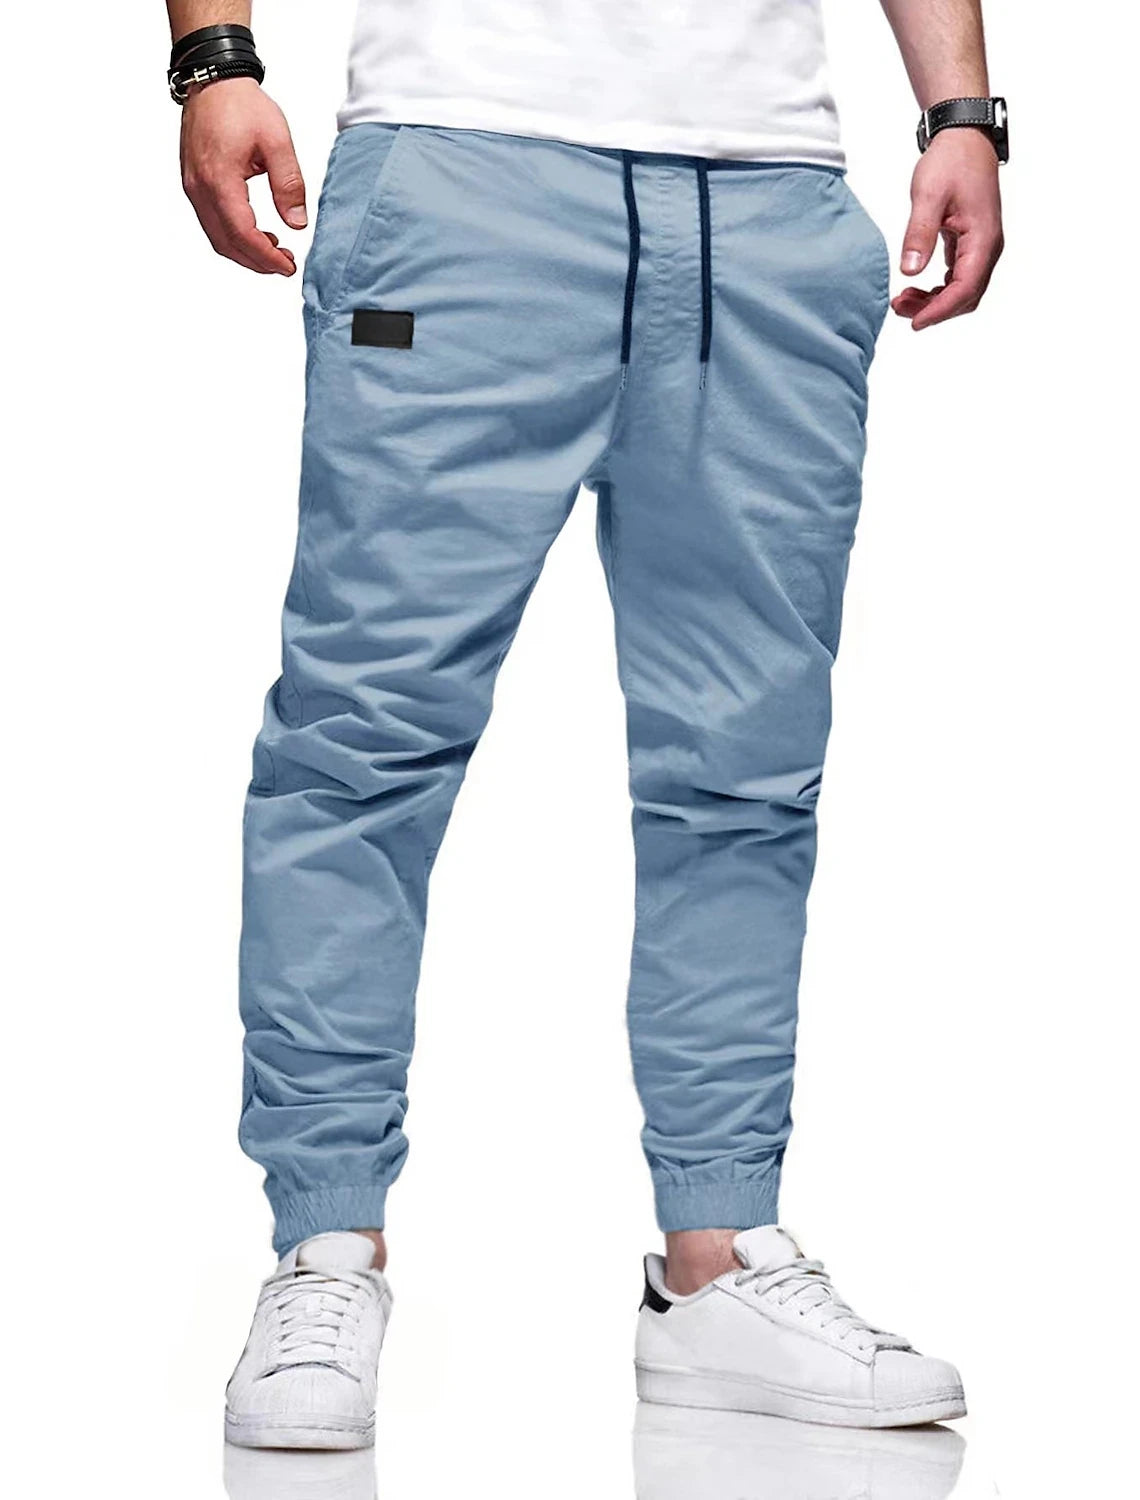 Men's Casual Sports Pants Street Pants High Quality Straight Pants